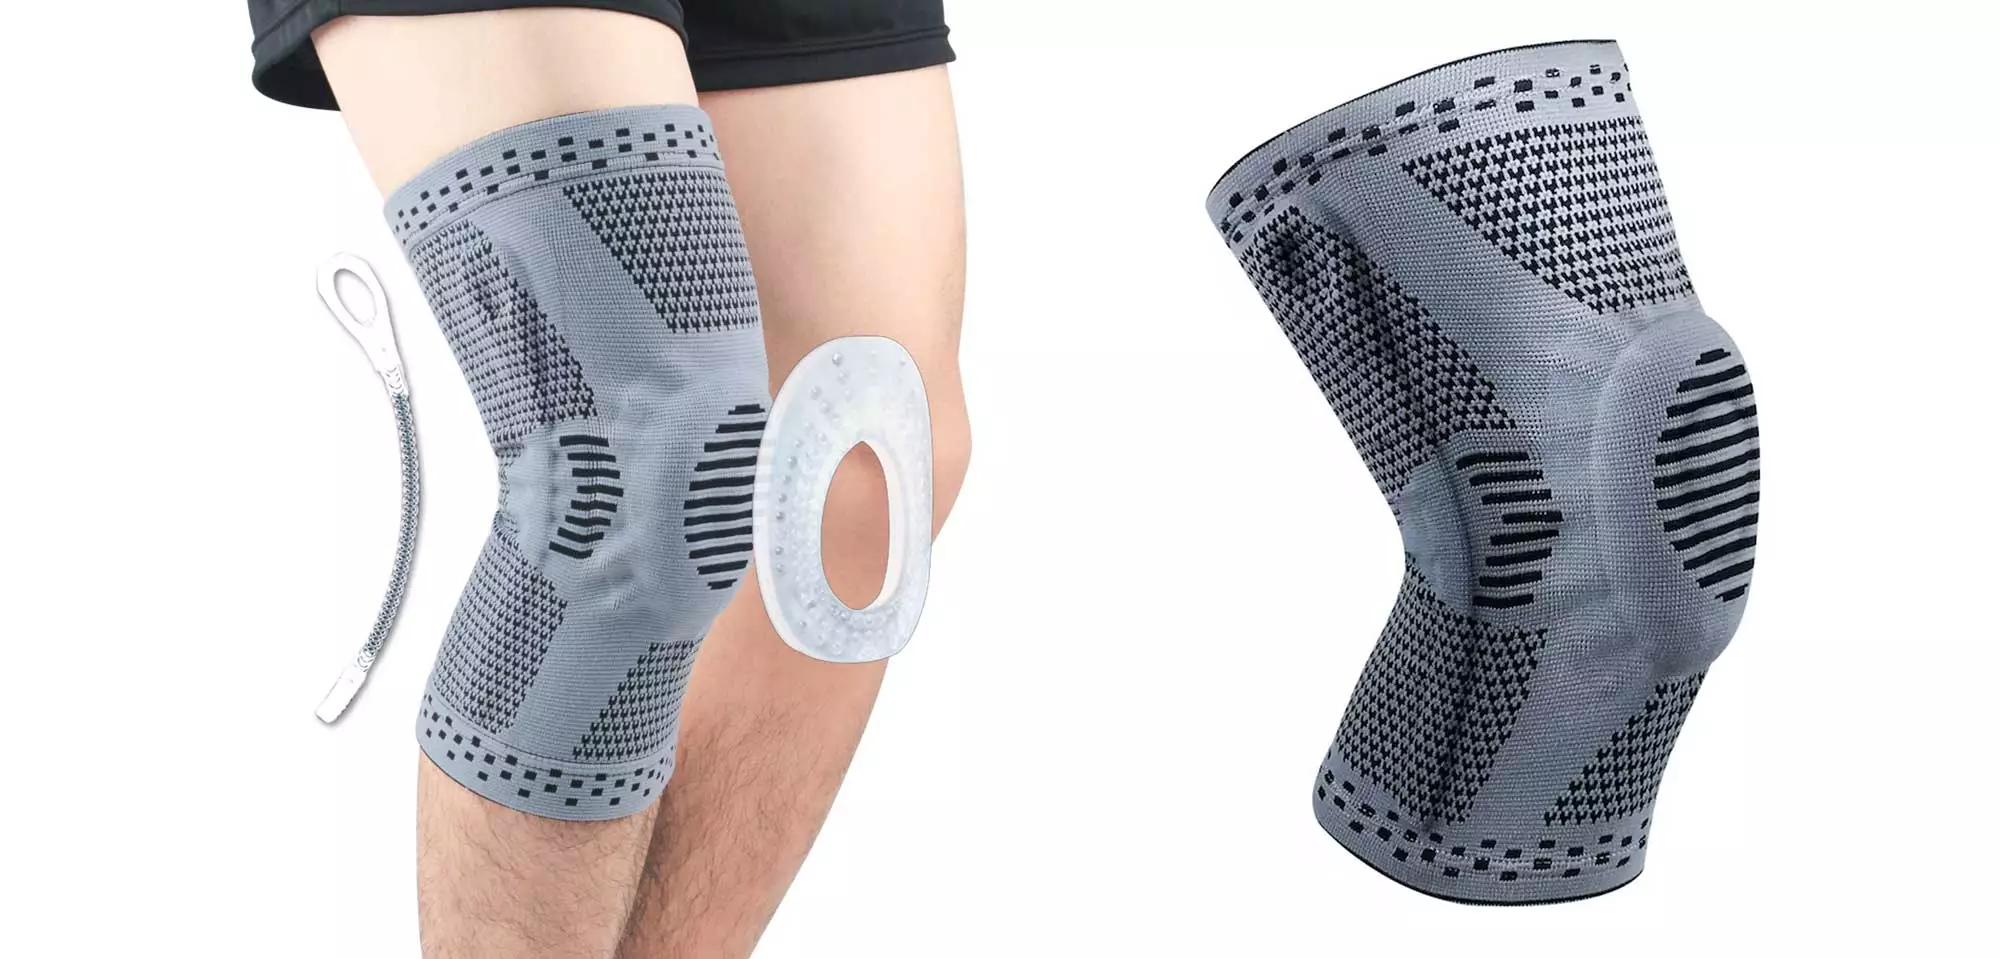 Person in shorts wearing a FlexKneePro knee brace for support.